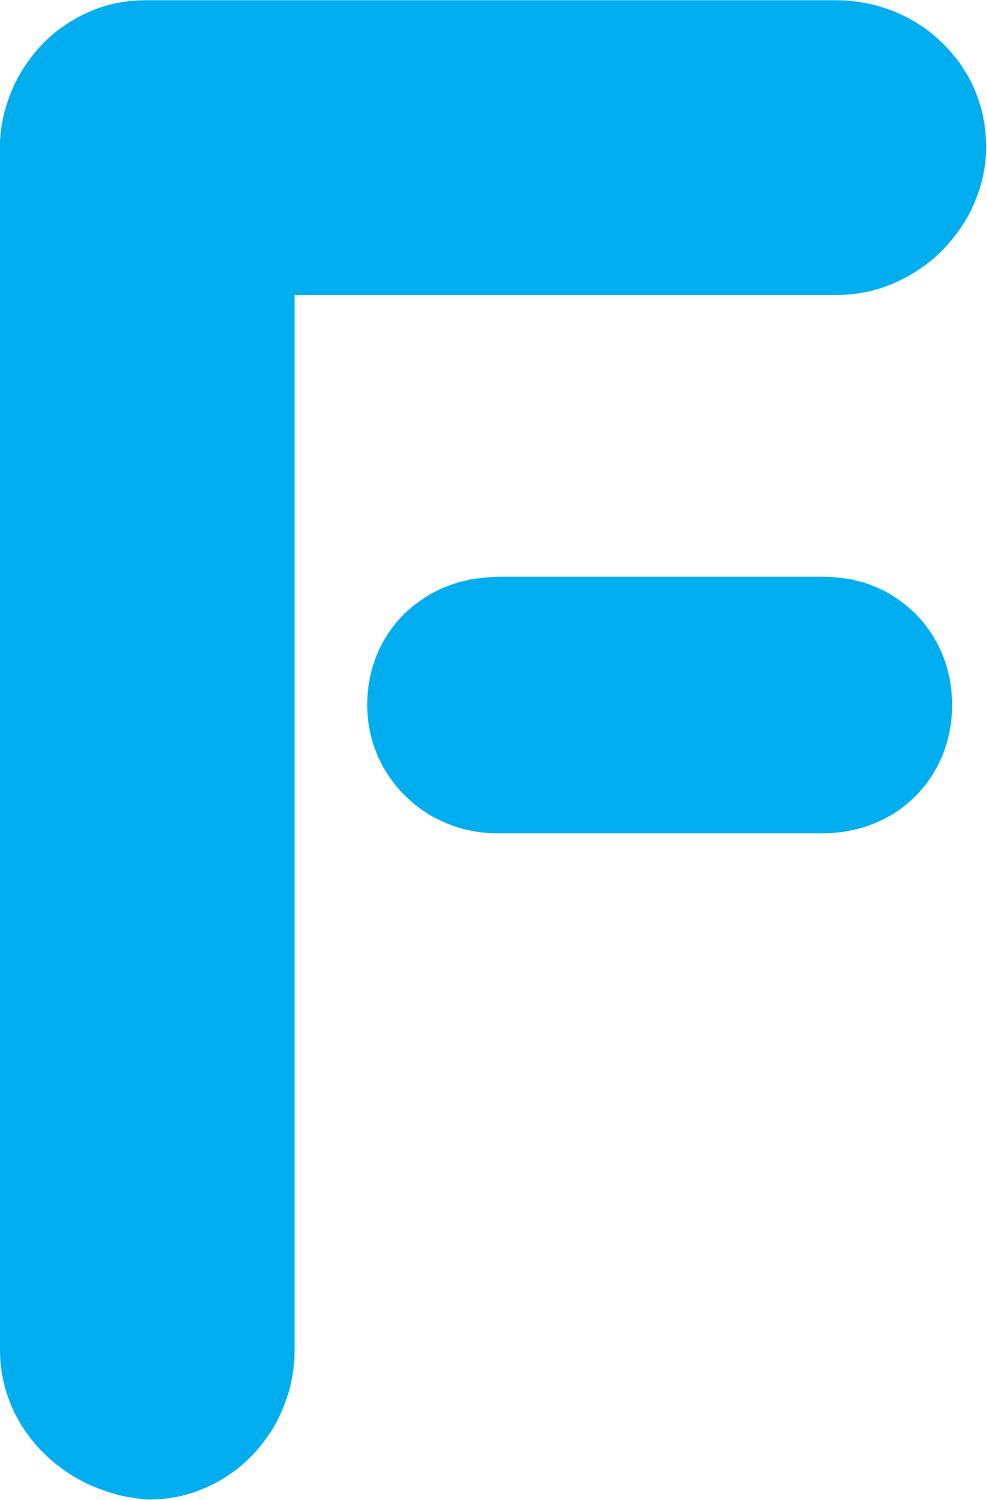 FactSet logo (transparent PNG)